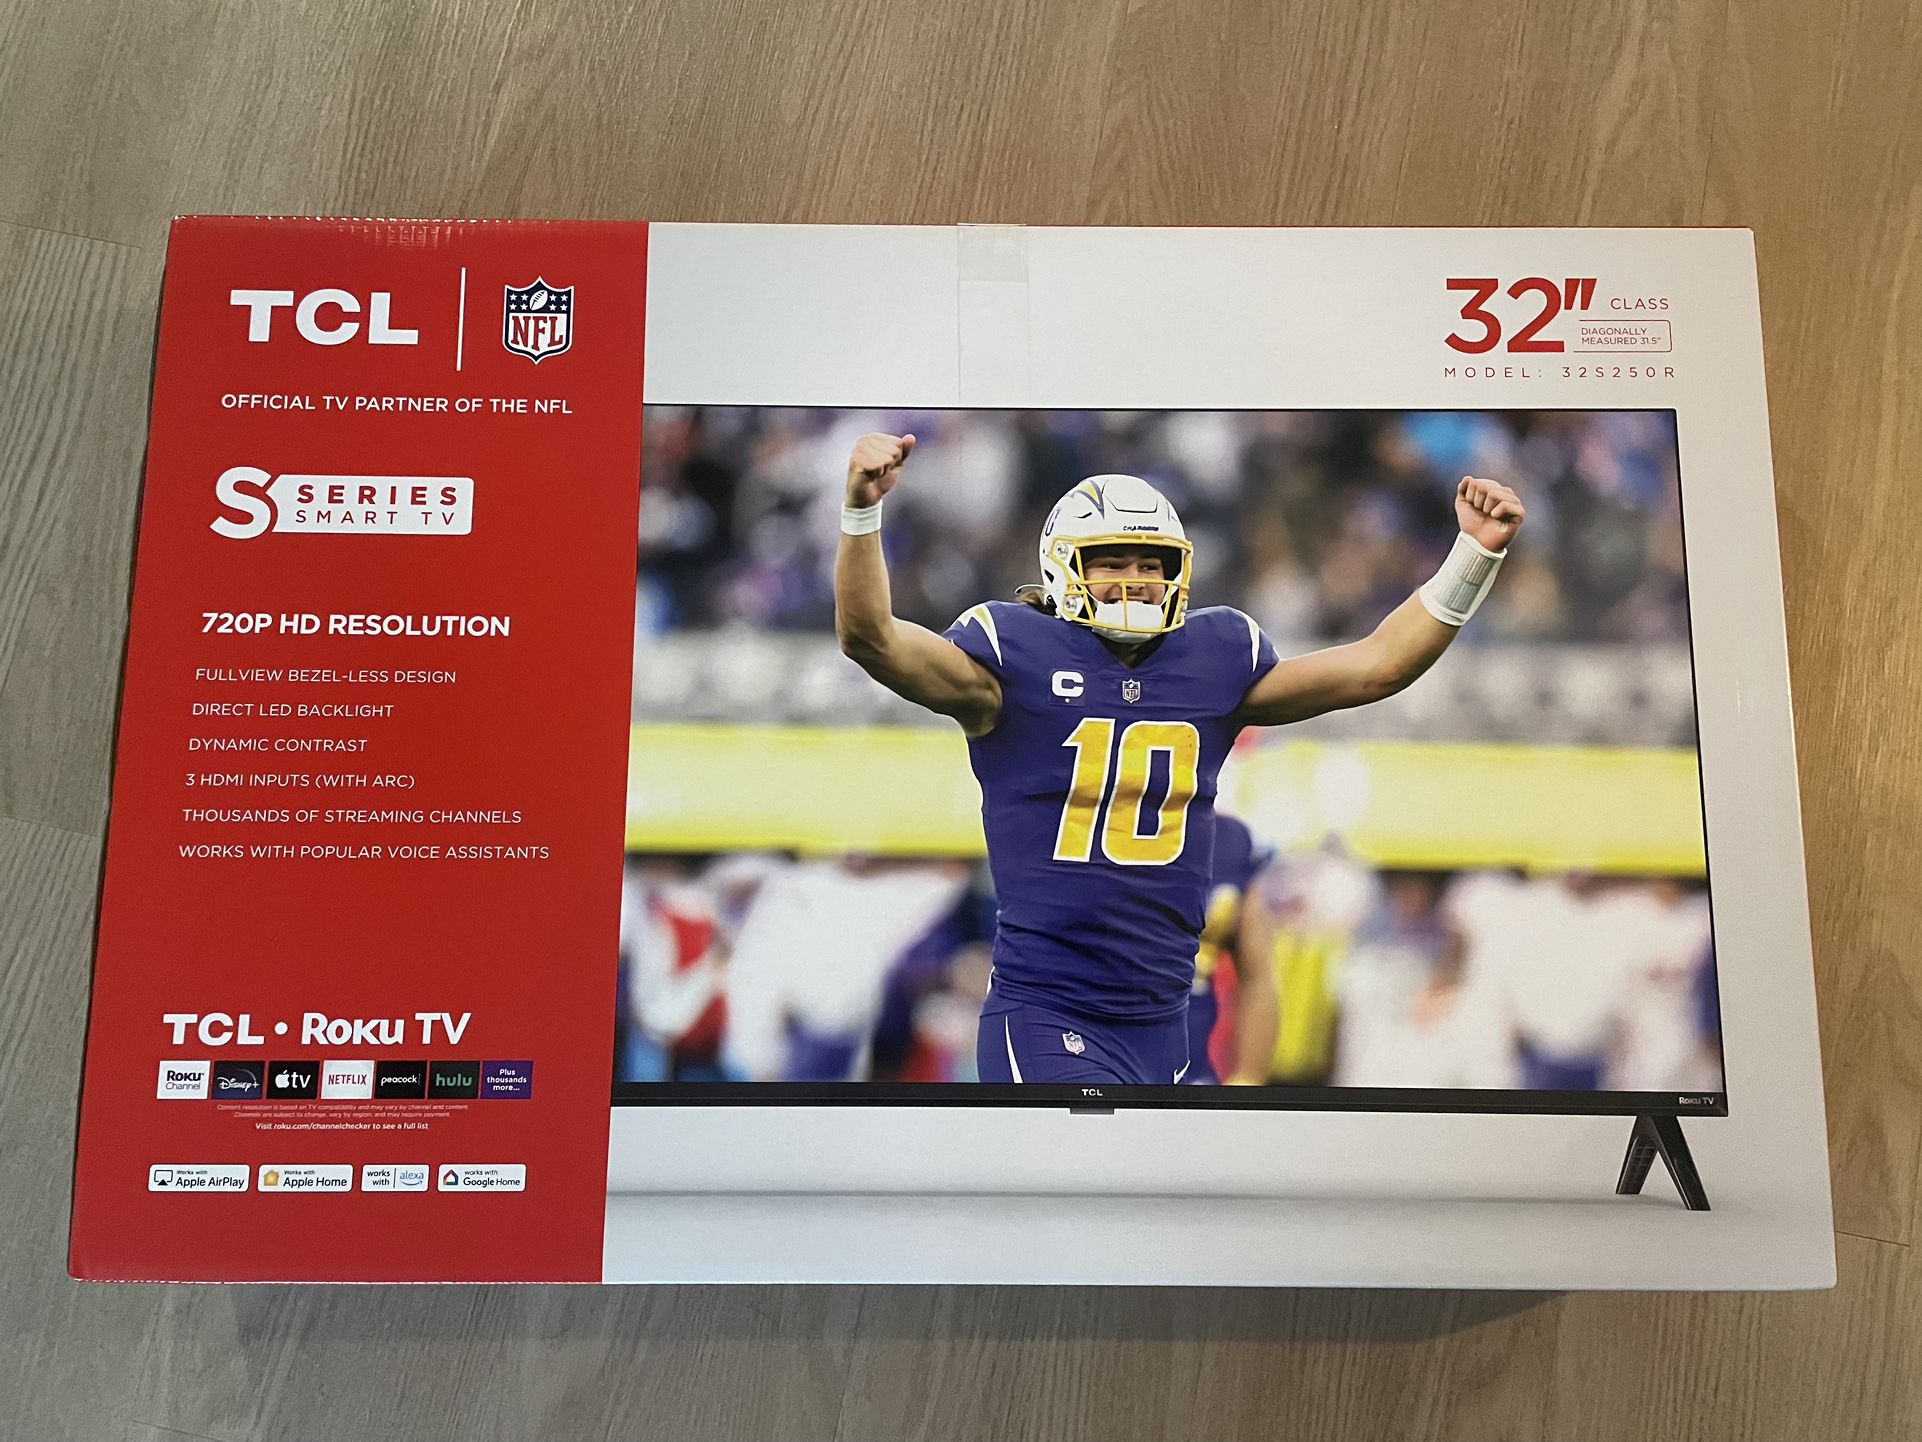 TCL 32” S Series Smart TV